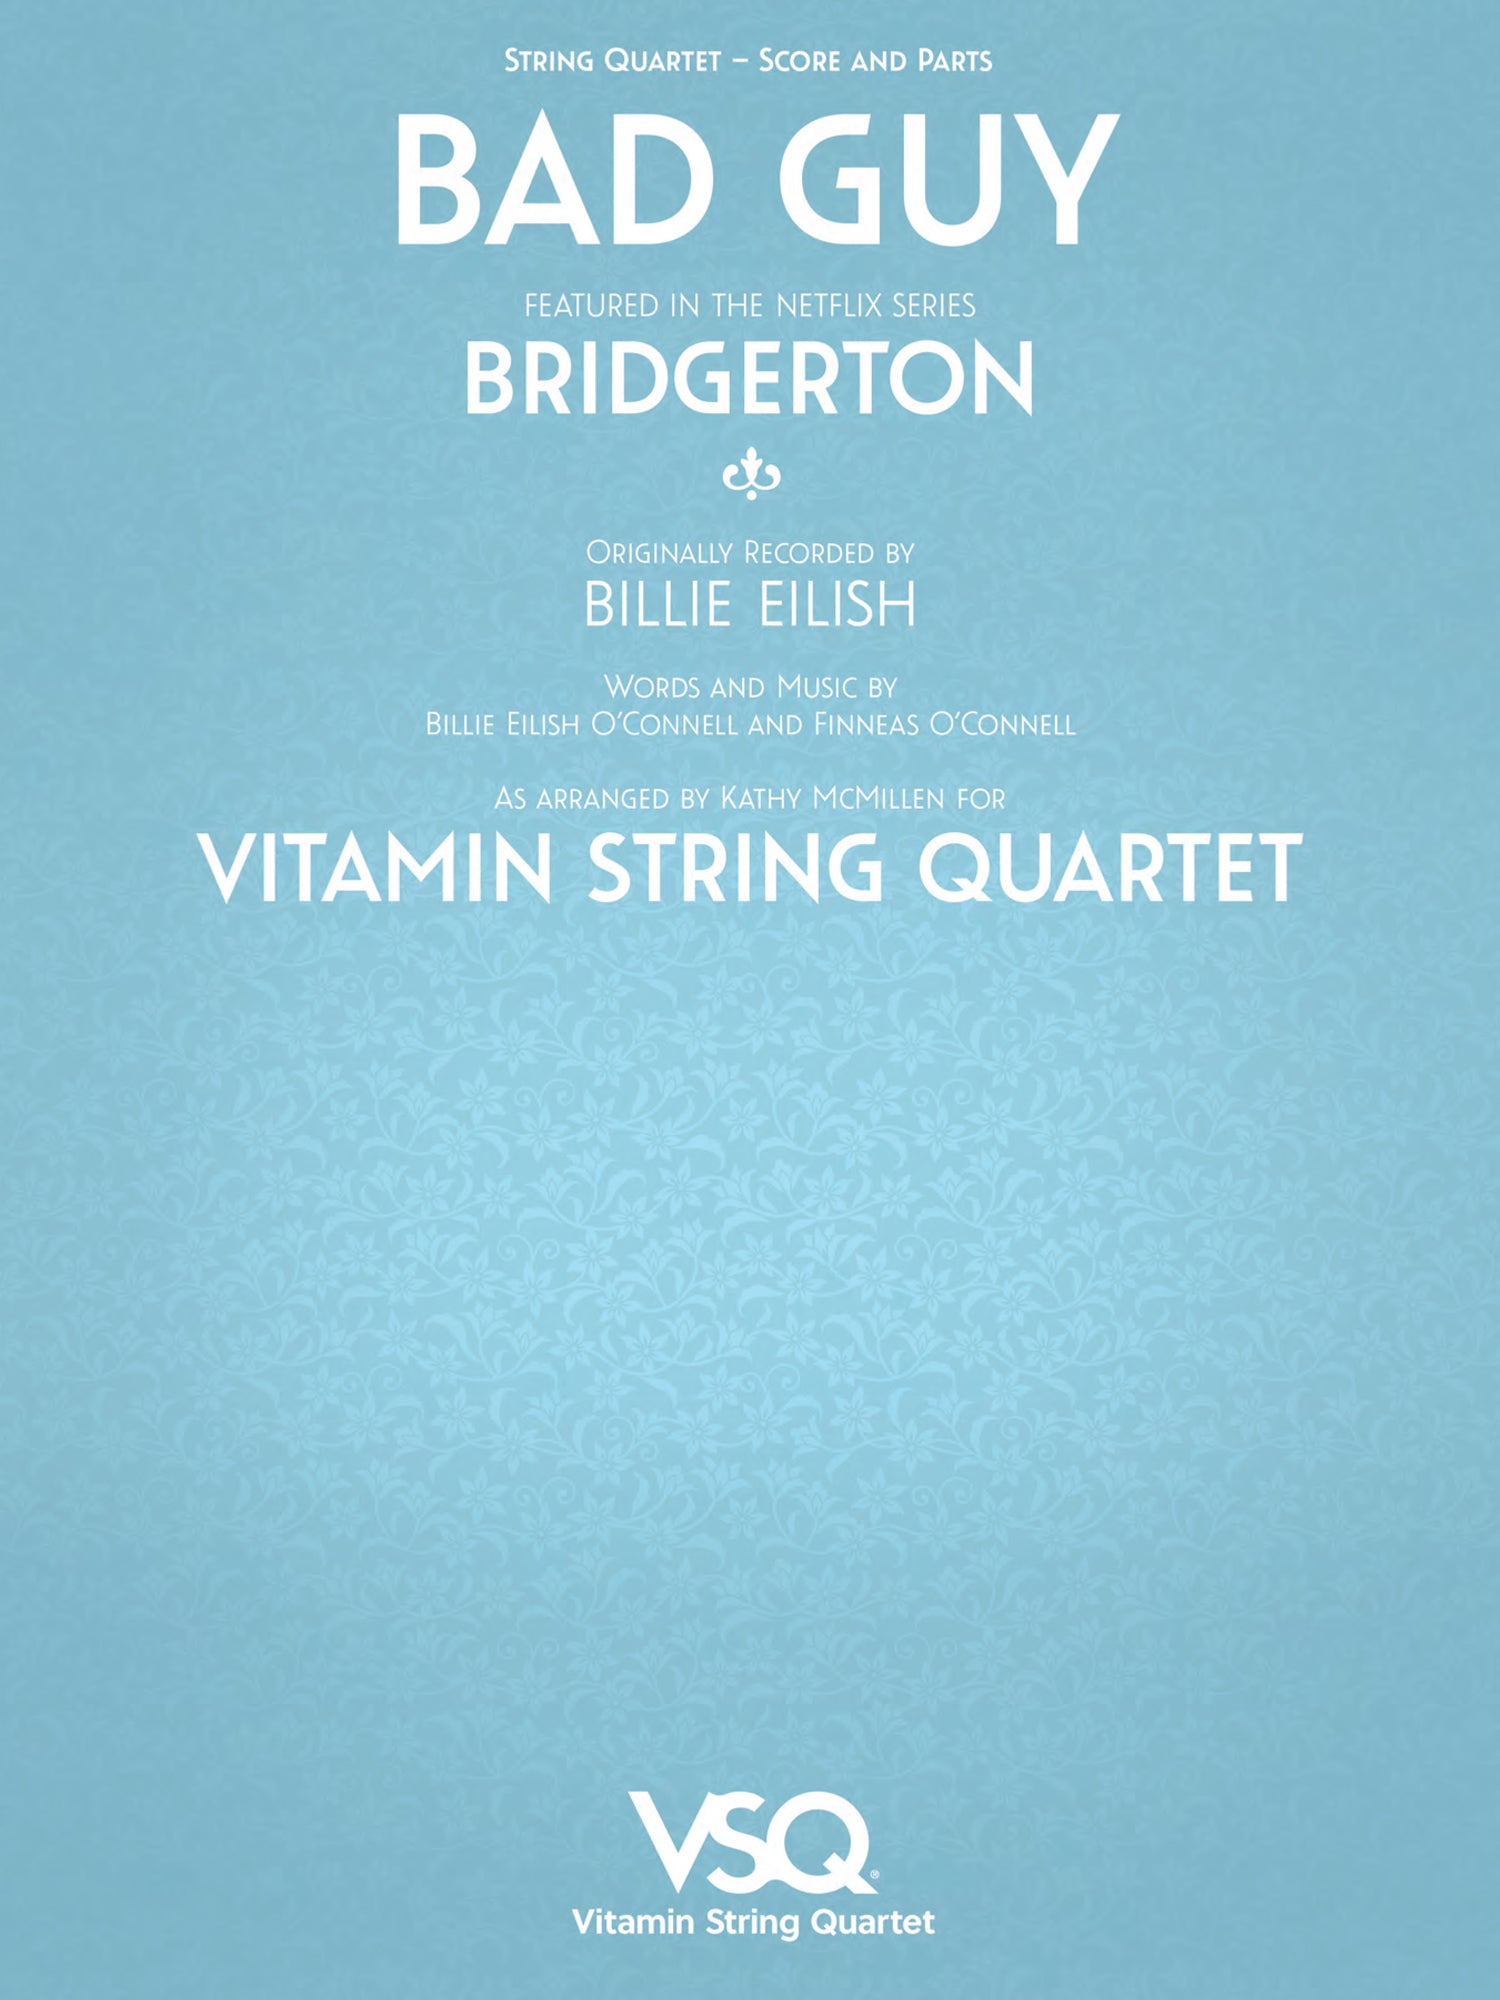 bad guy vitamin string quartet as featured in bridgerton